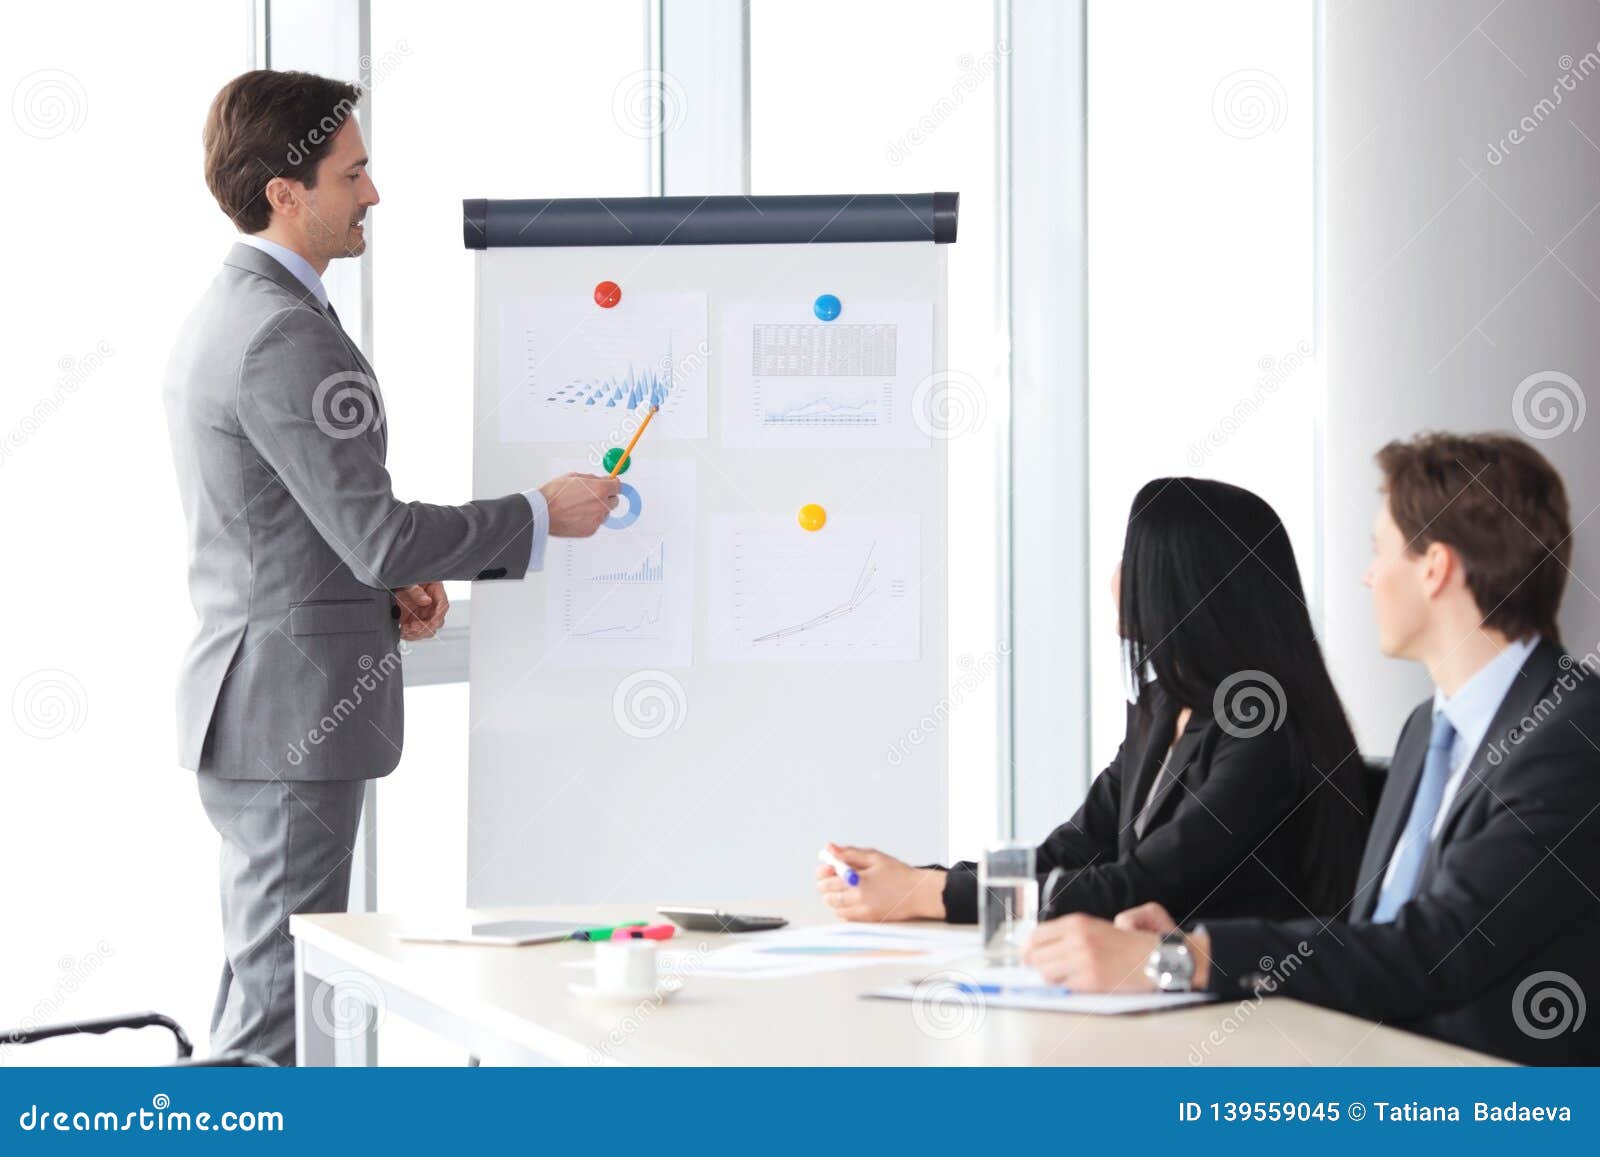 business presentation stock image